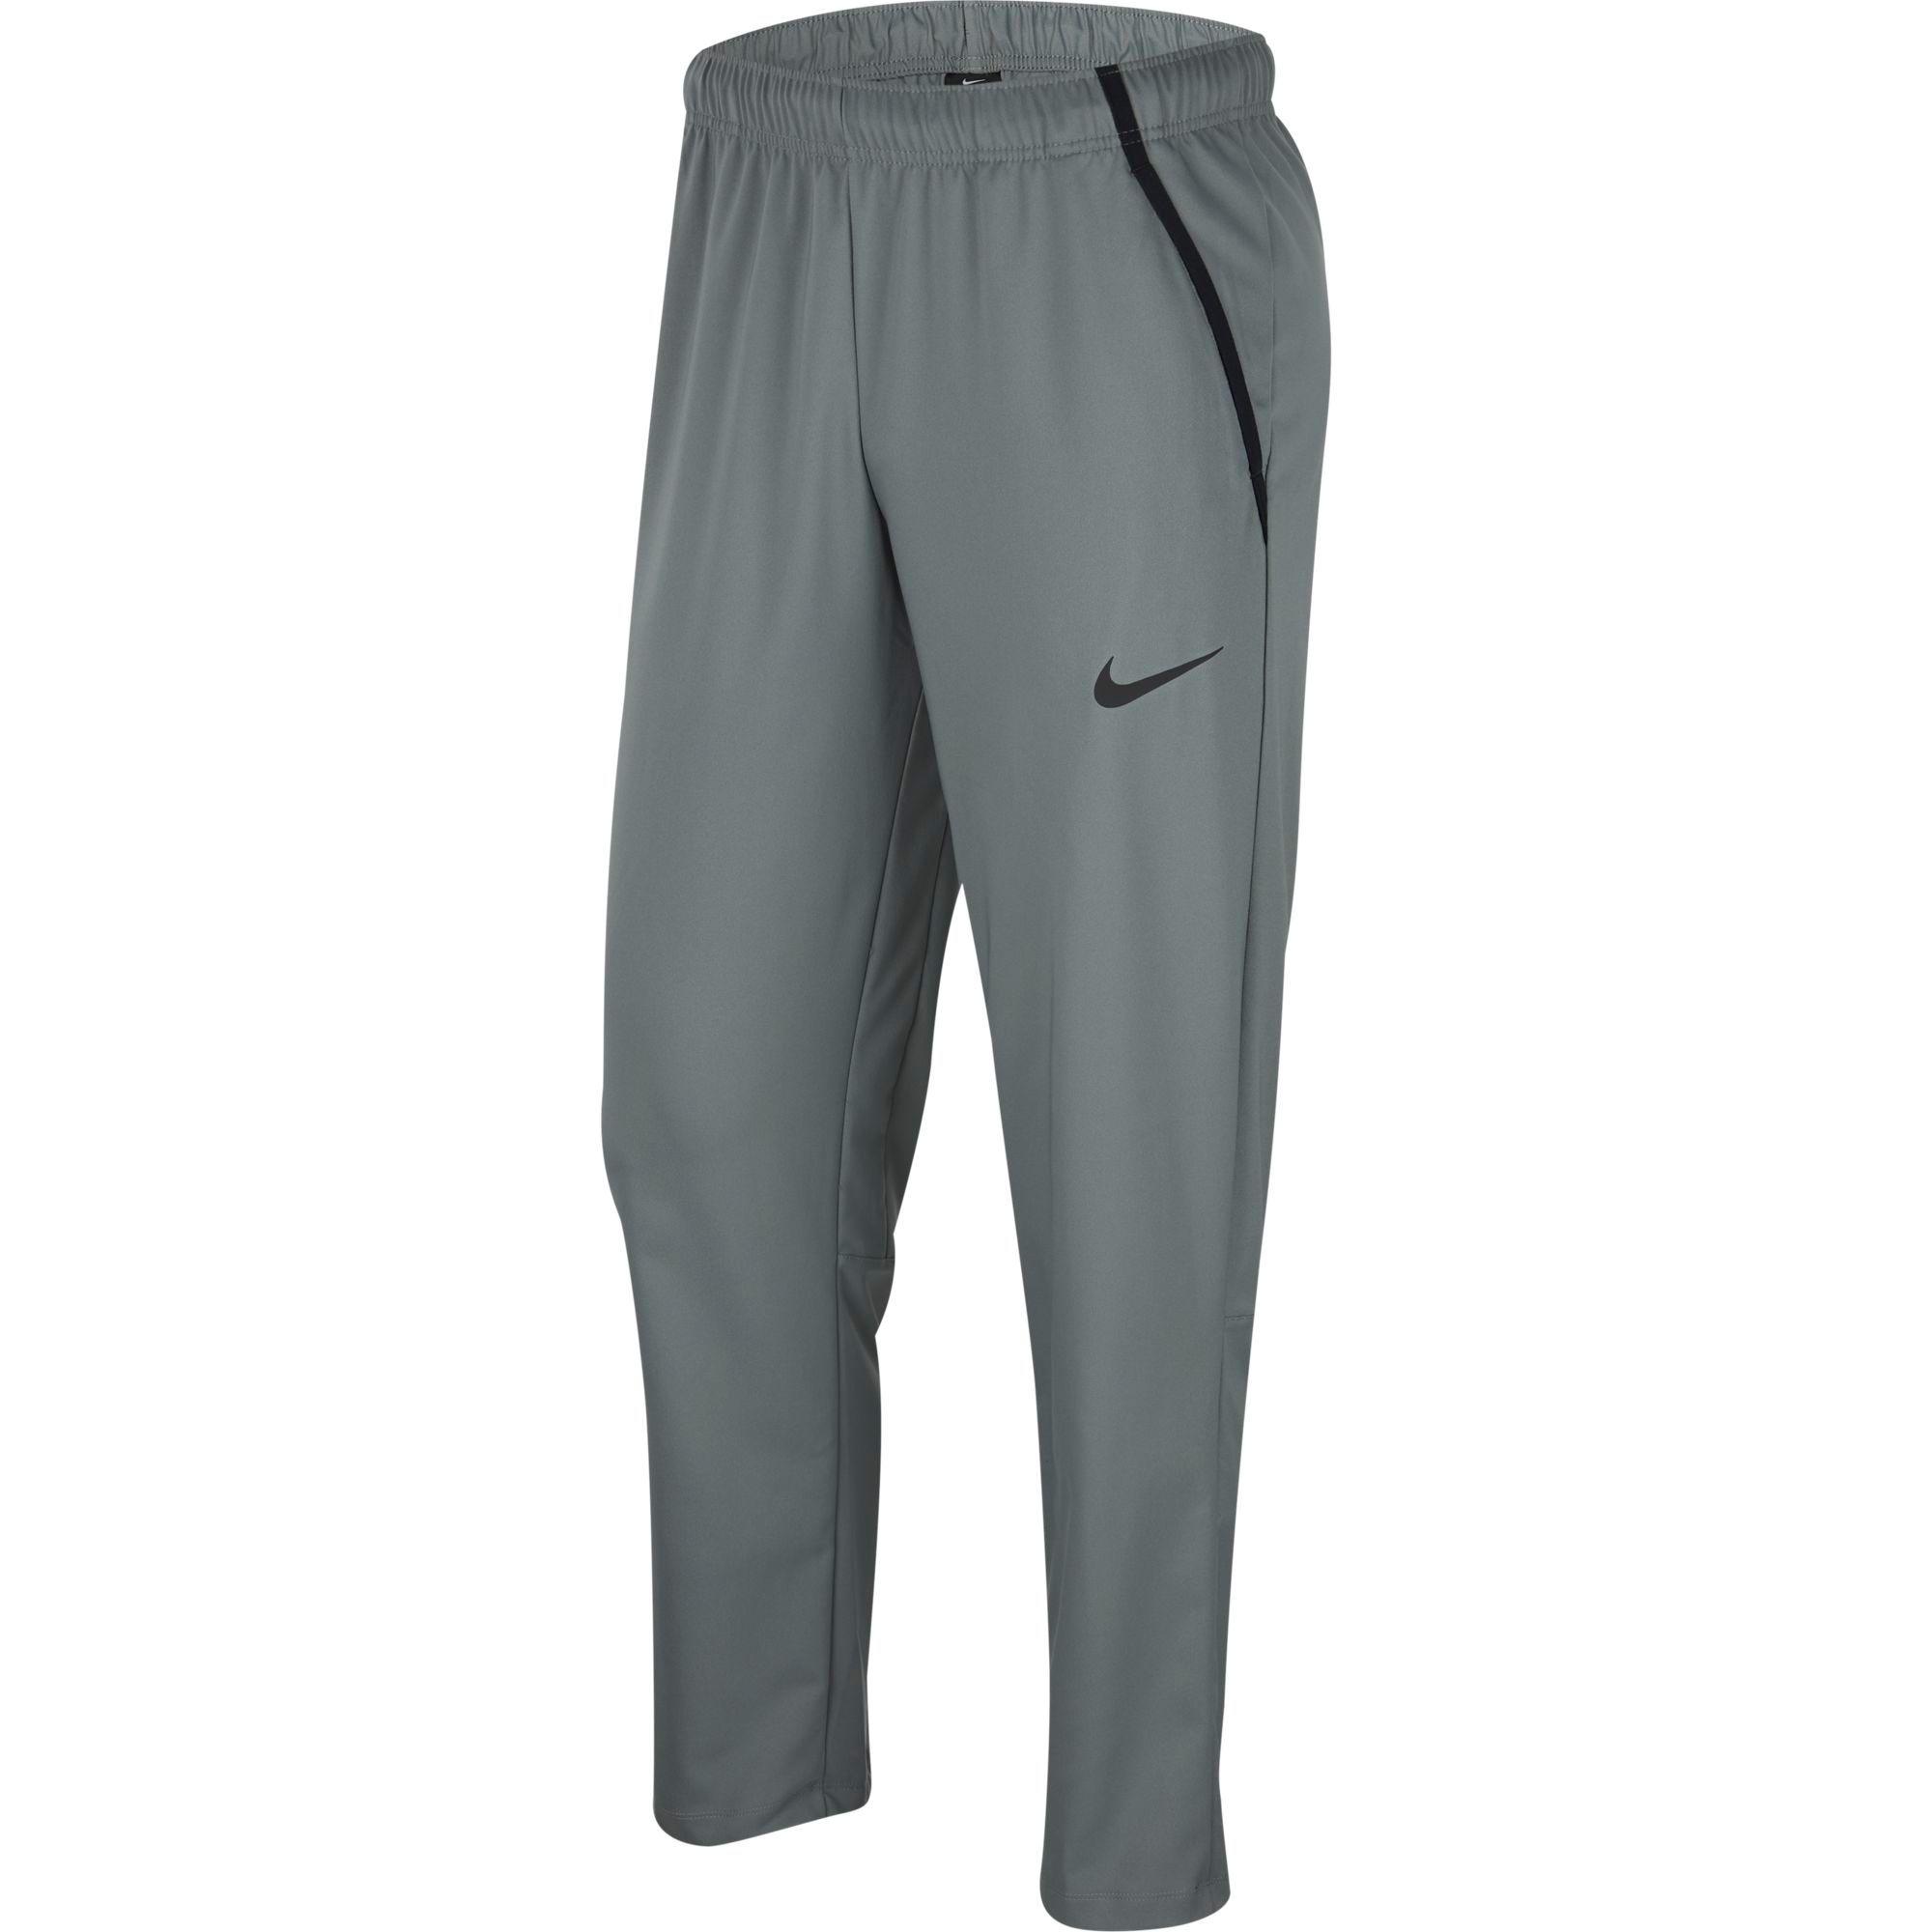 Nike Dry Team Woven Training Pants in Smoke Grey/Black (Gray) for Men ...